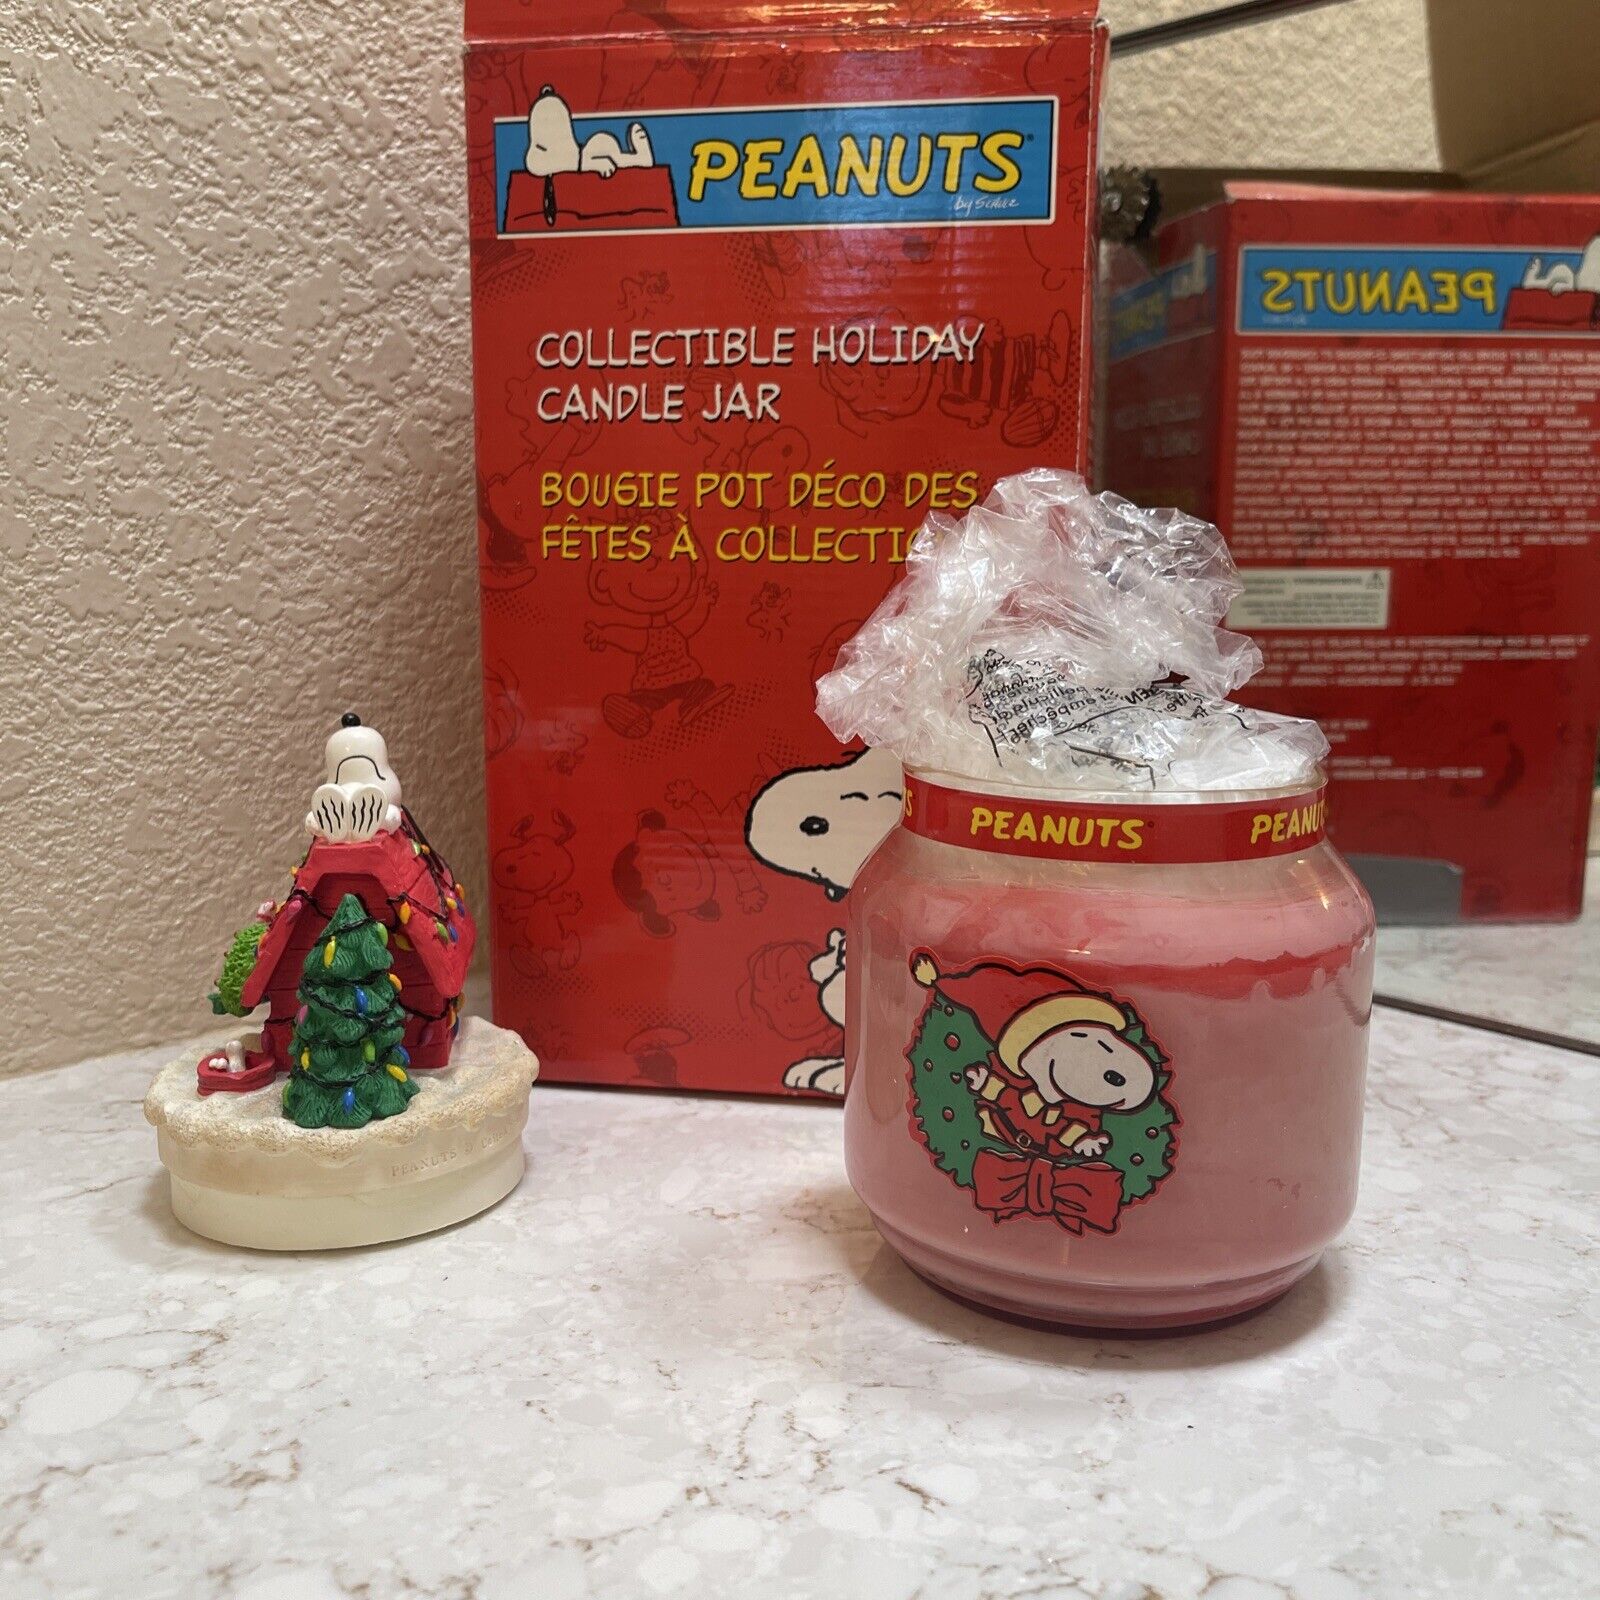 Peanuts Collectible Holiday Candle Jar \